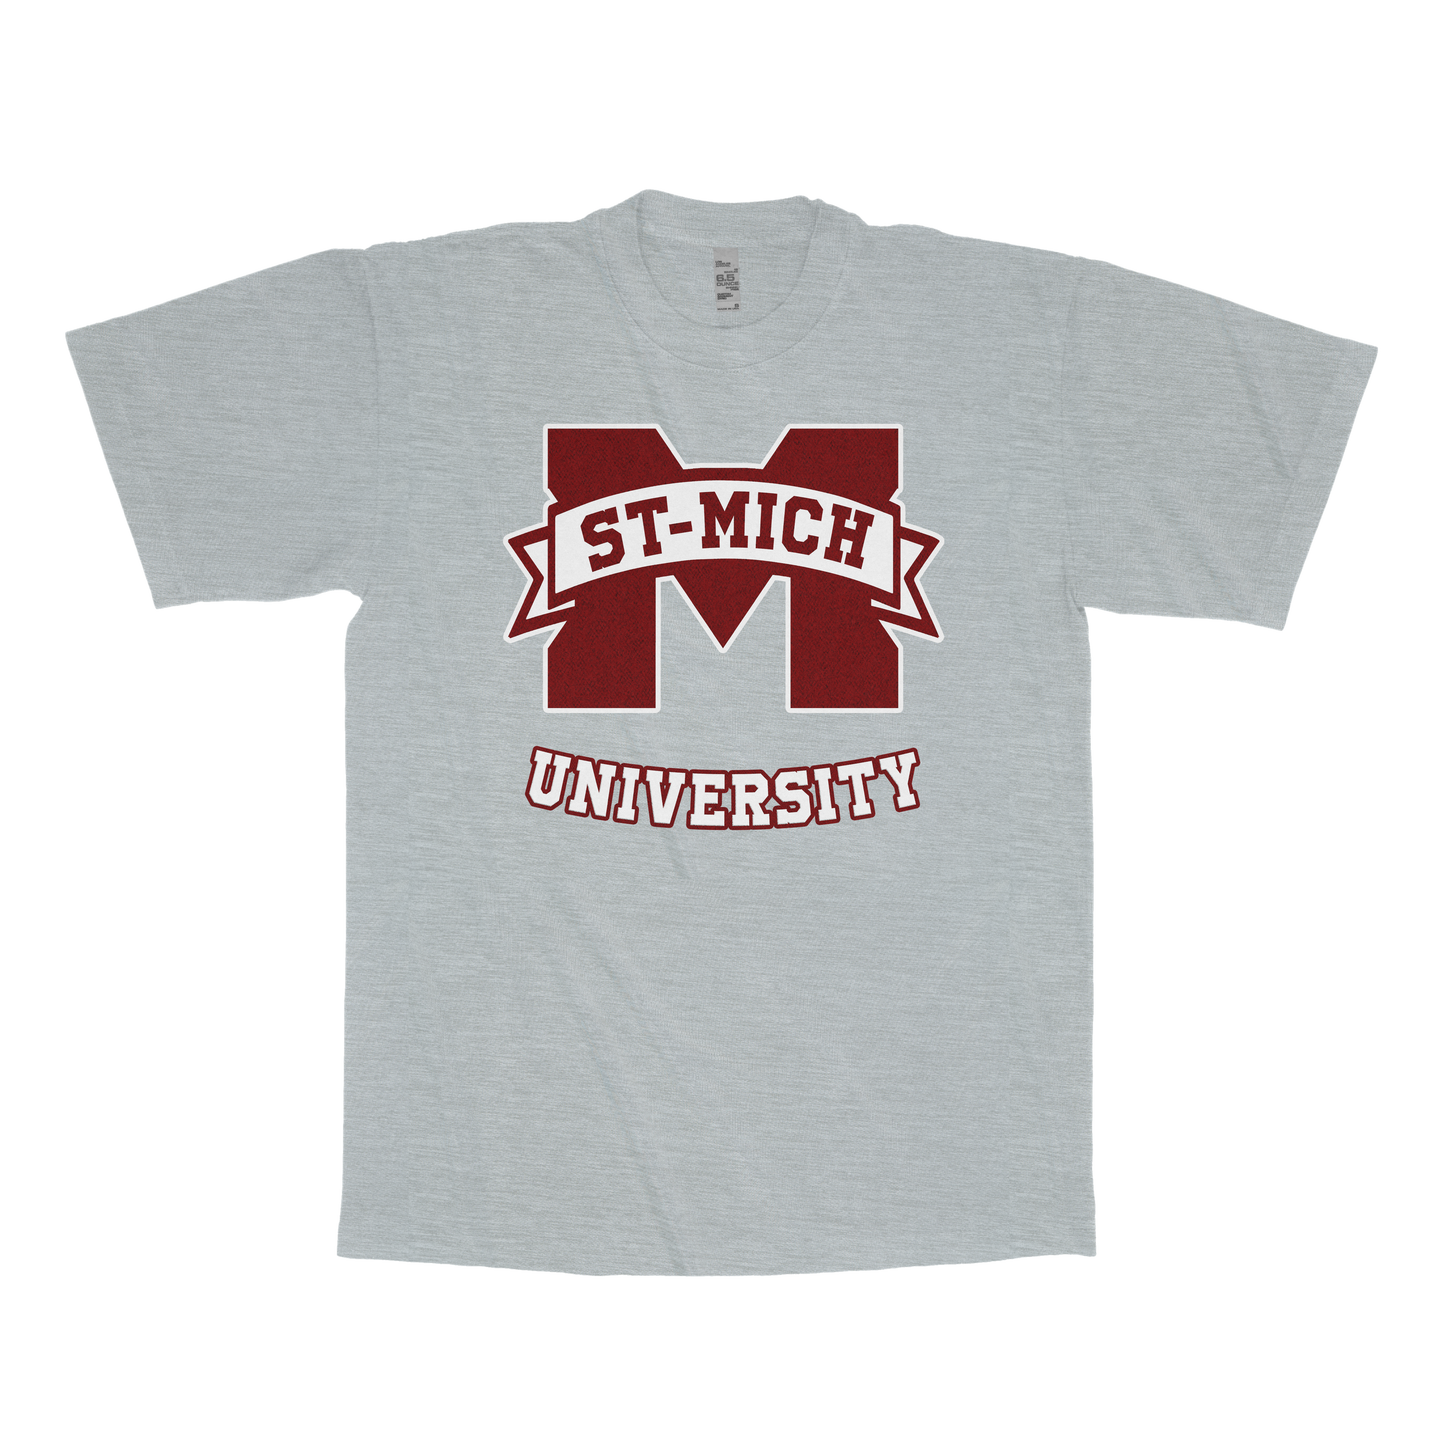 St-Michel University (FAKE U T-Shirt)